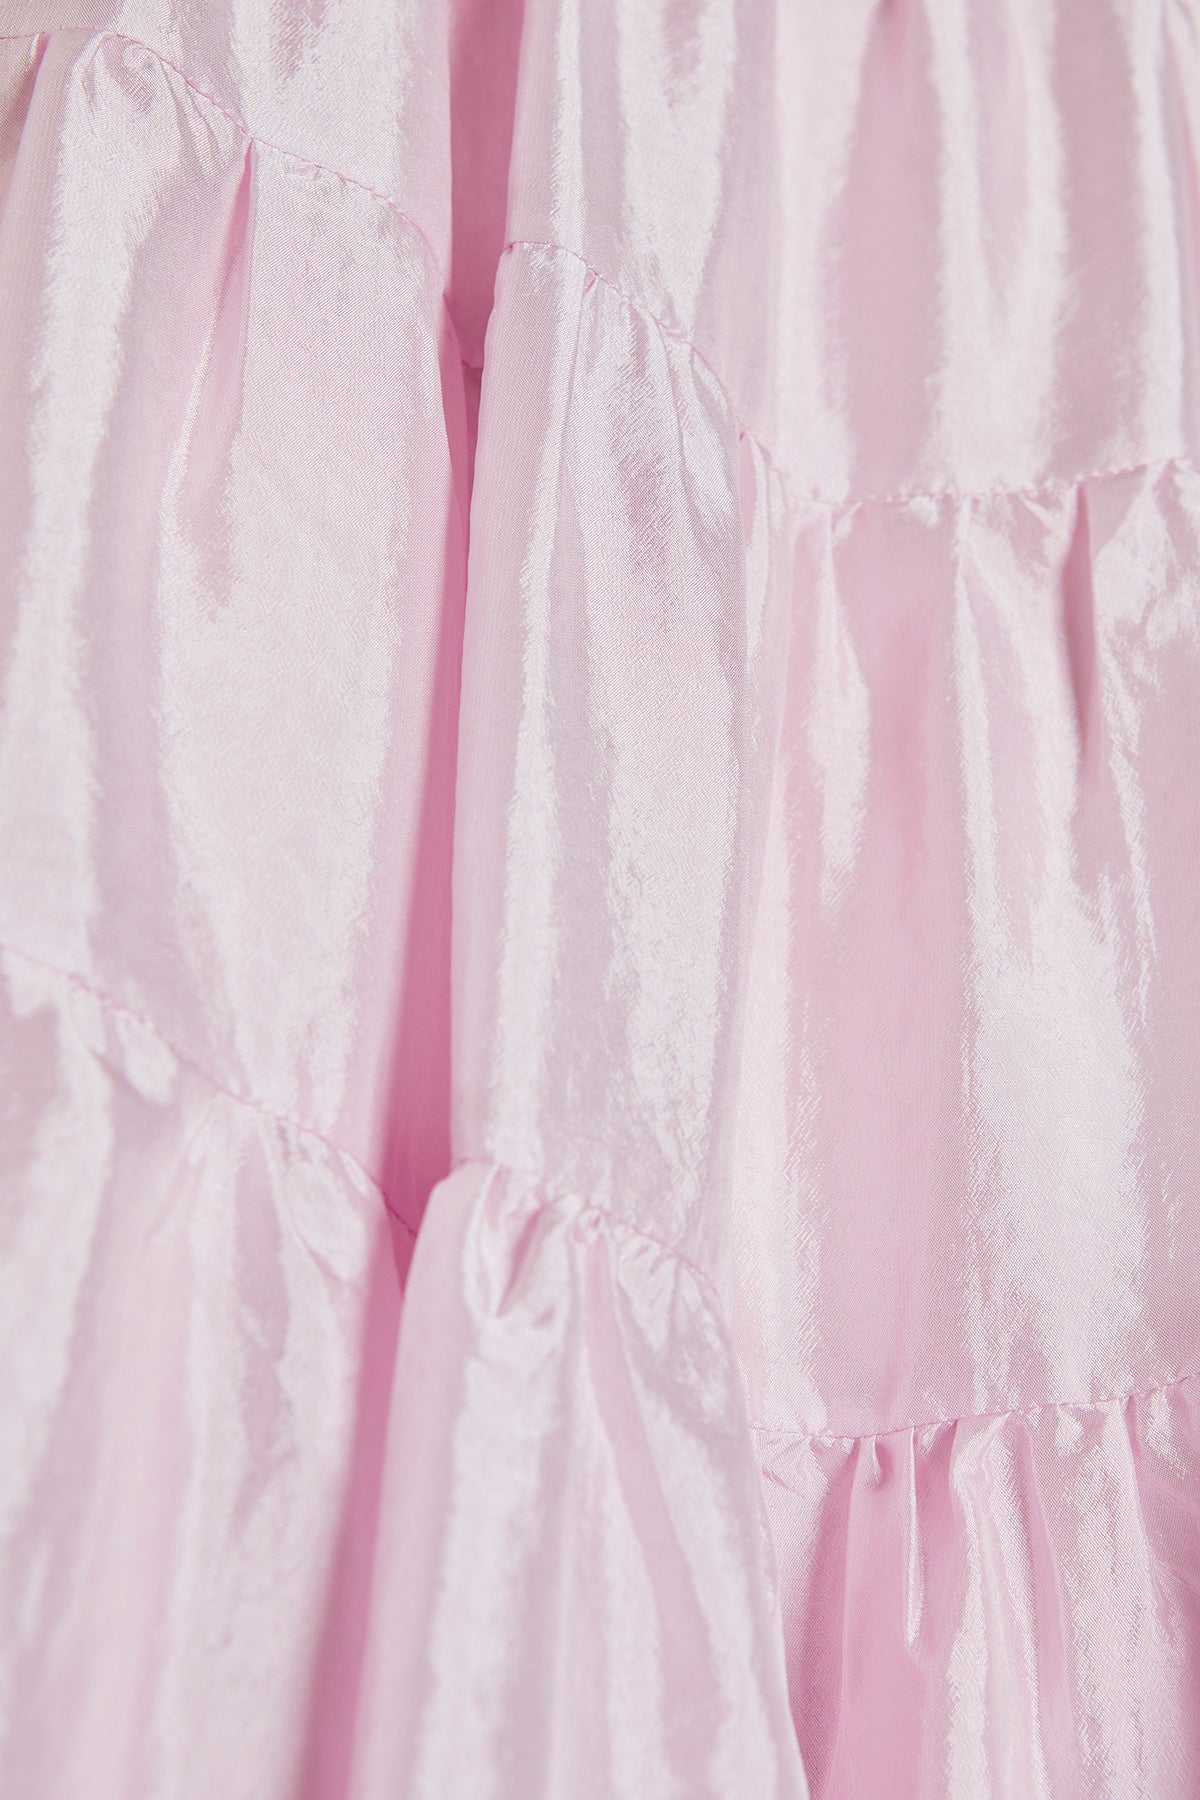 Sherbet Frill Skirt / Pink